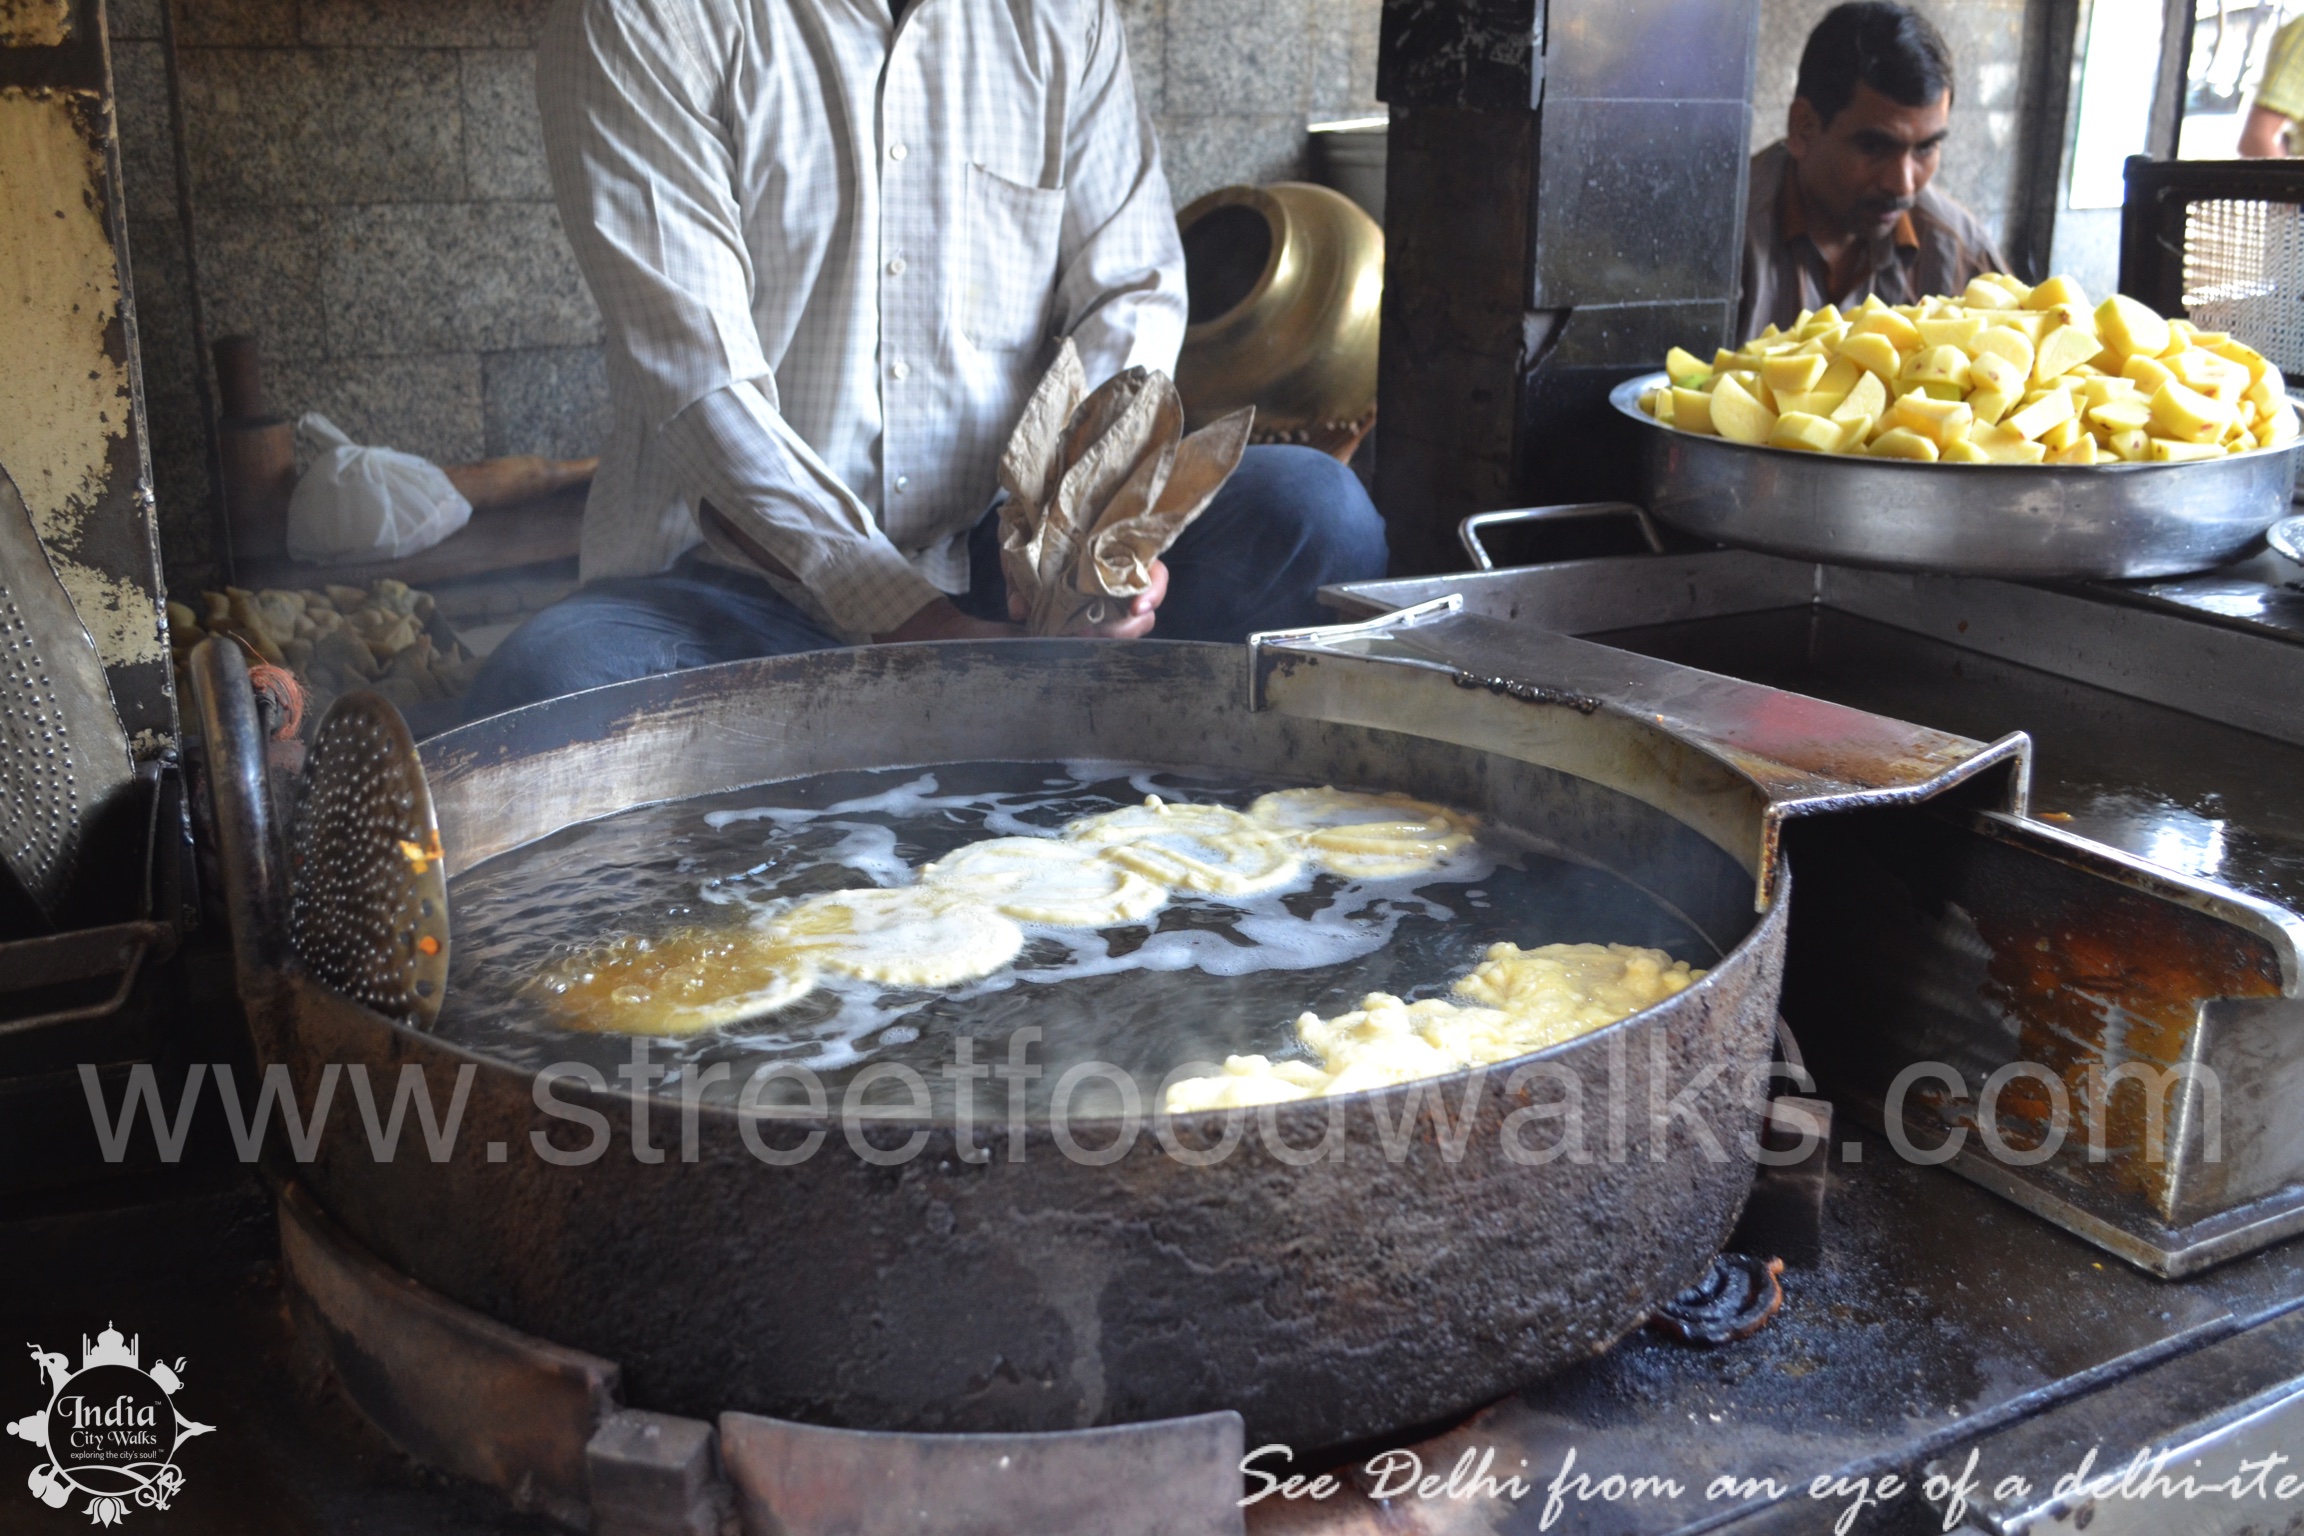 India City Walks » Street Food Tour in Shahjahanabad